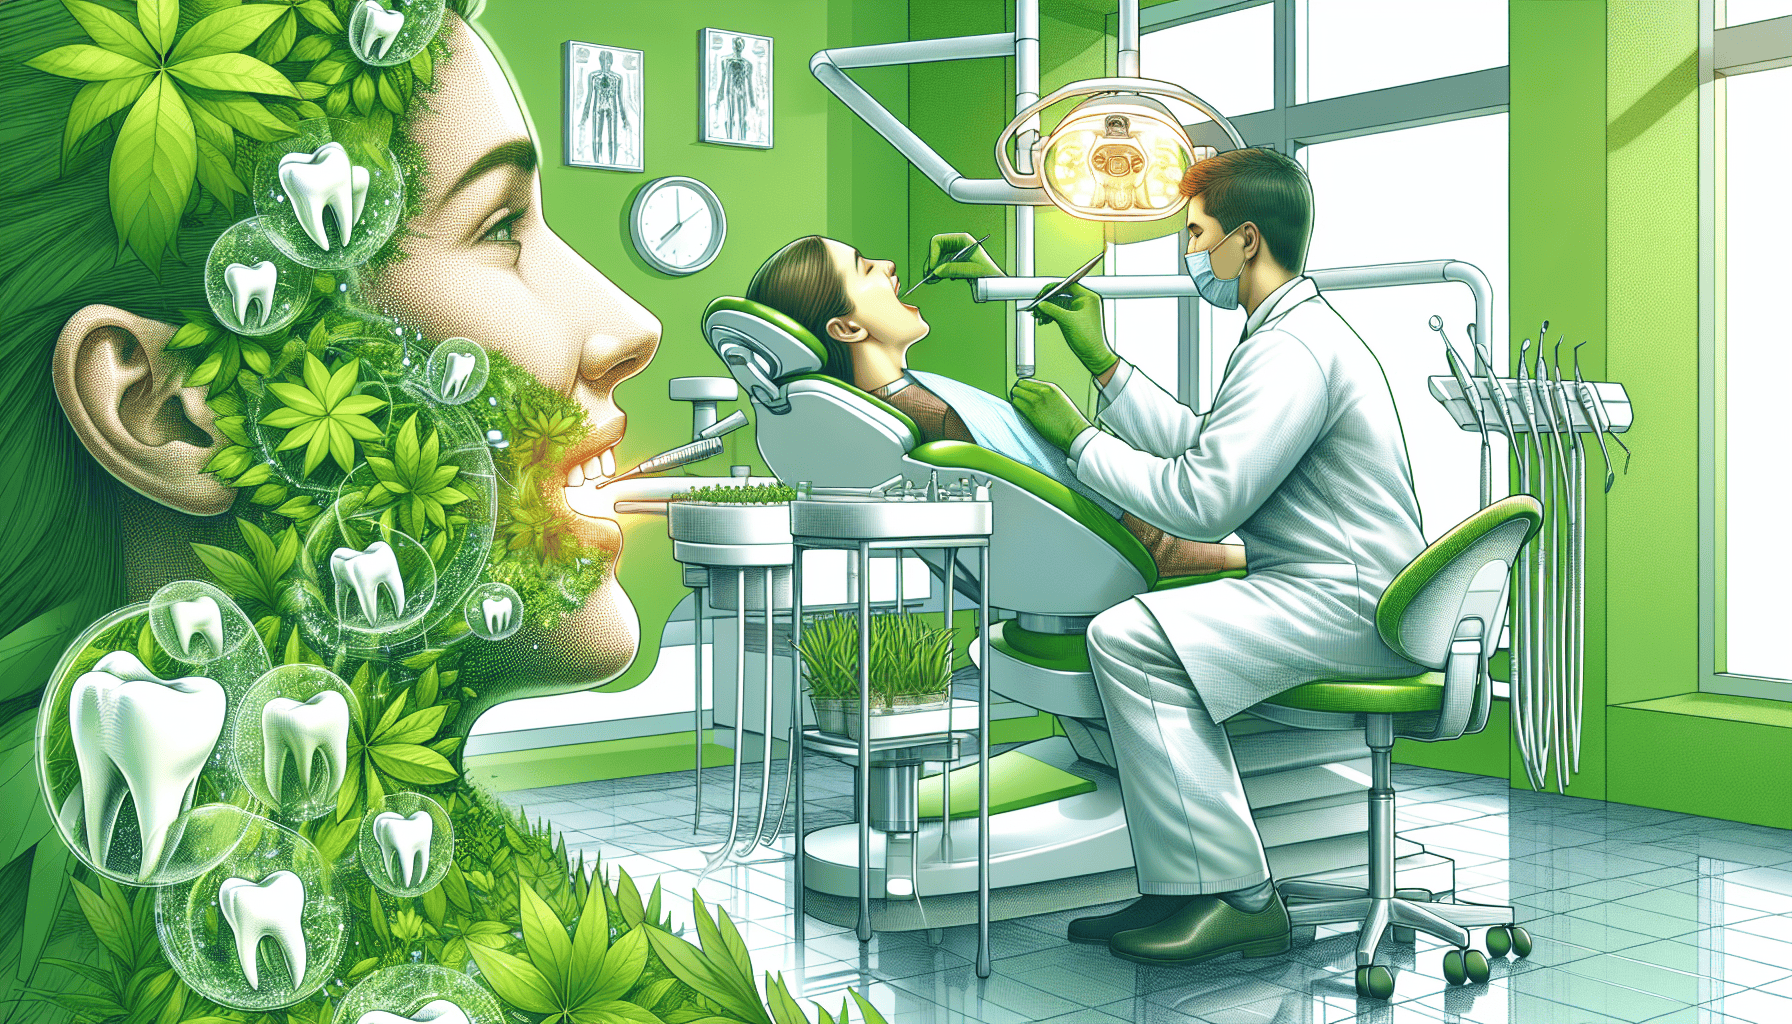 Illustration of a biological dentist using biocompatible materials